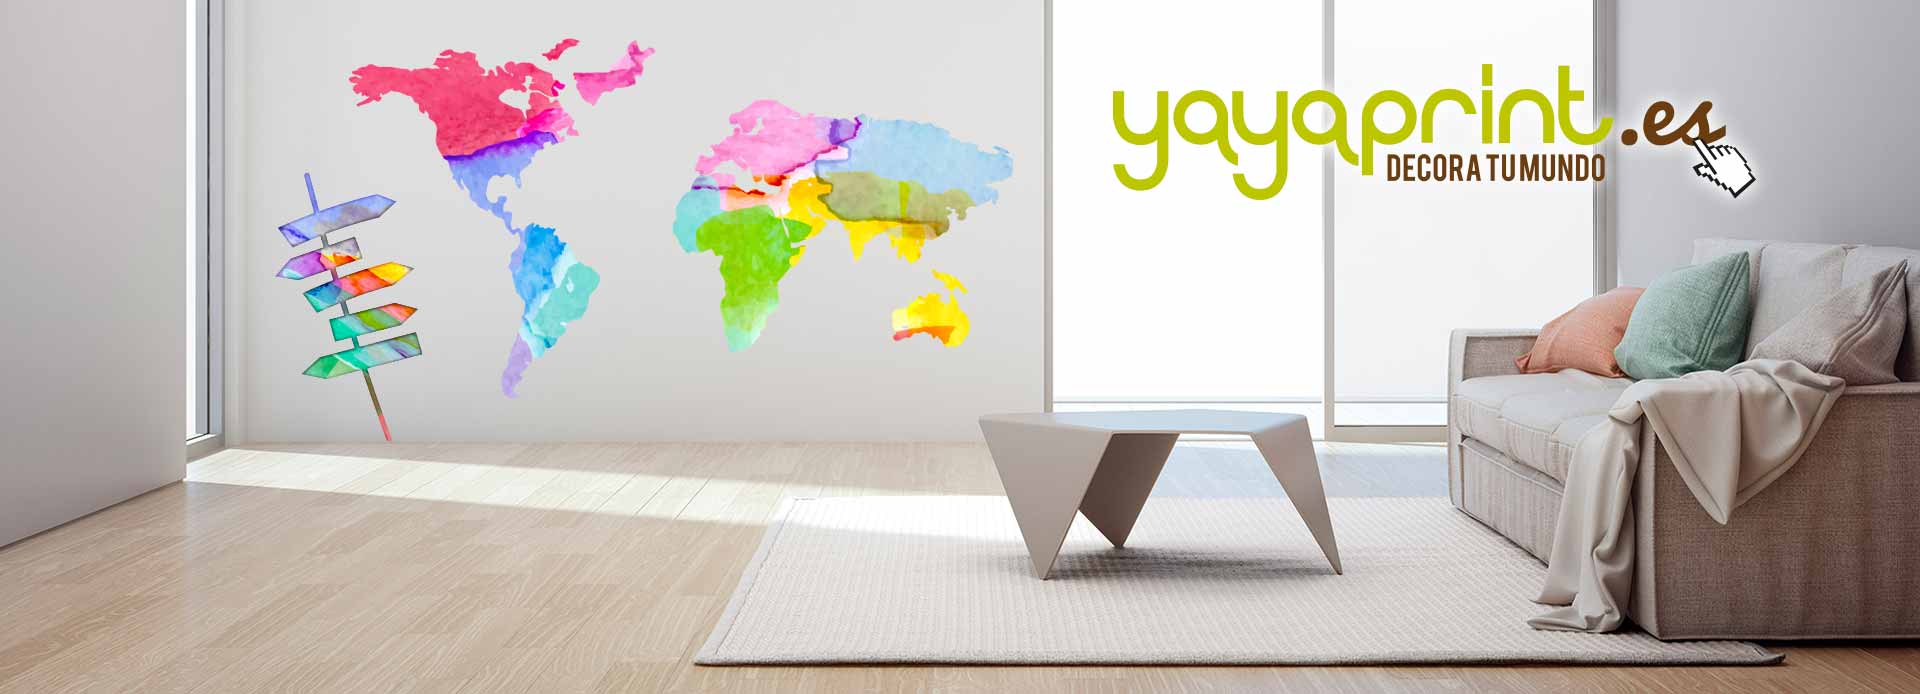 yayaprint impresion digital vinilos decorativos